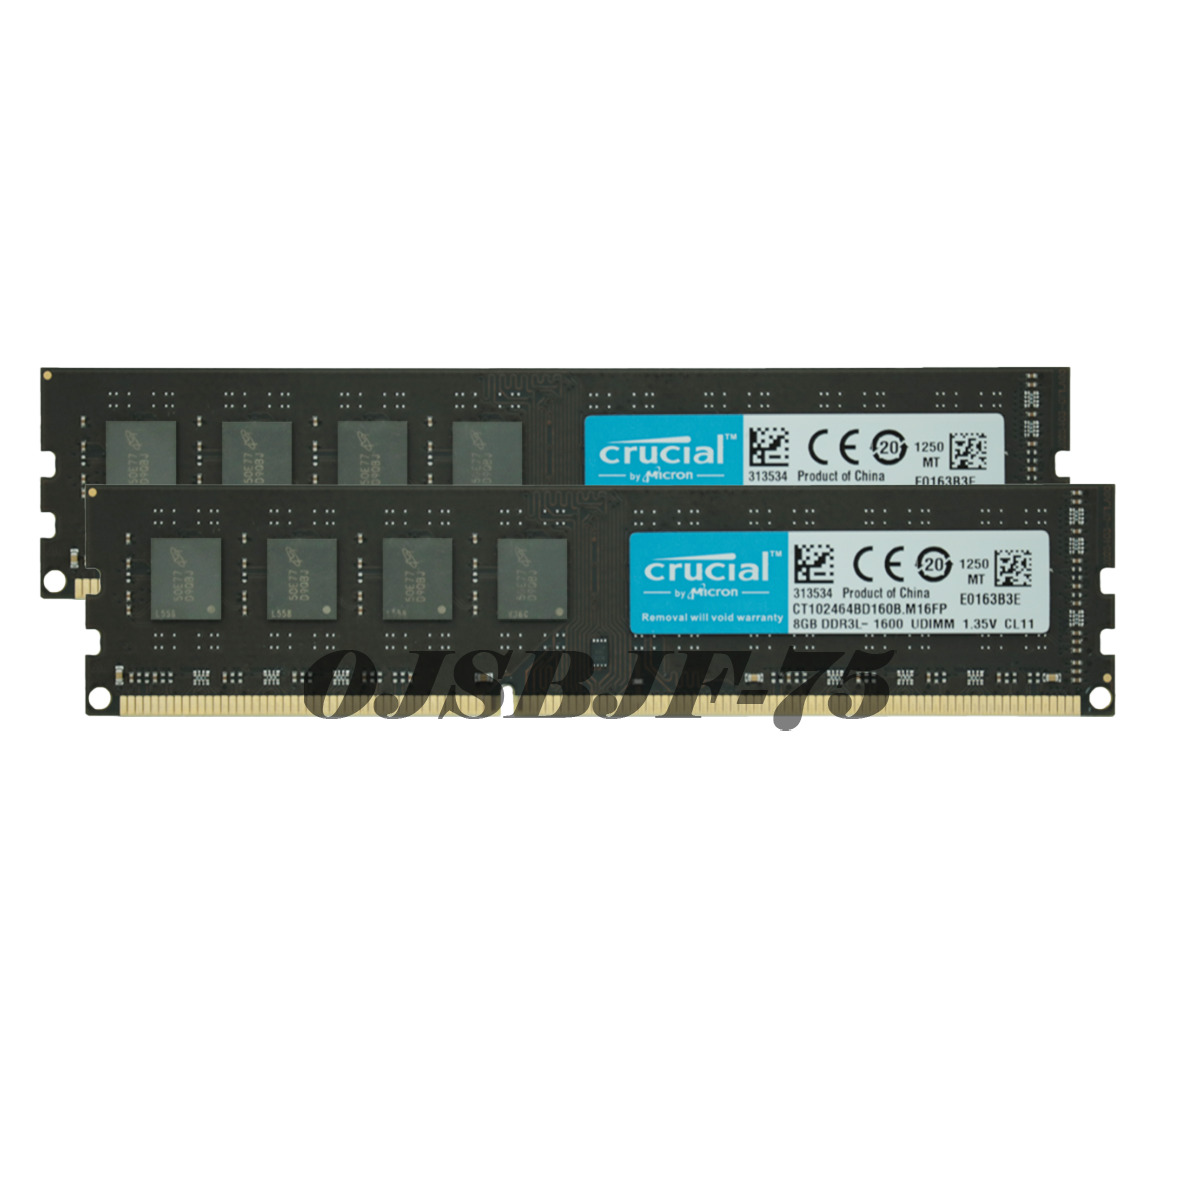 CRUCIAL DDR3 1600MHz 16GB (2x 8GB) PC3-12800 Desktop 240pin DIMM Memory RAM 16G